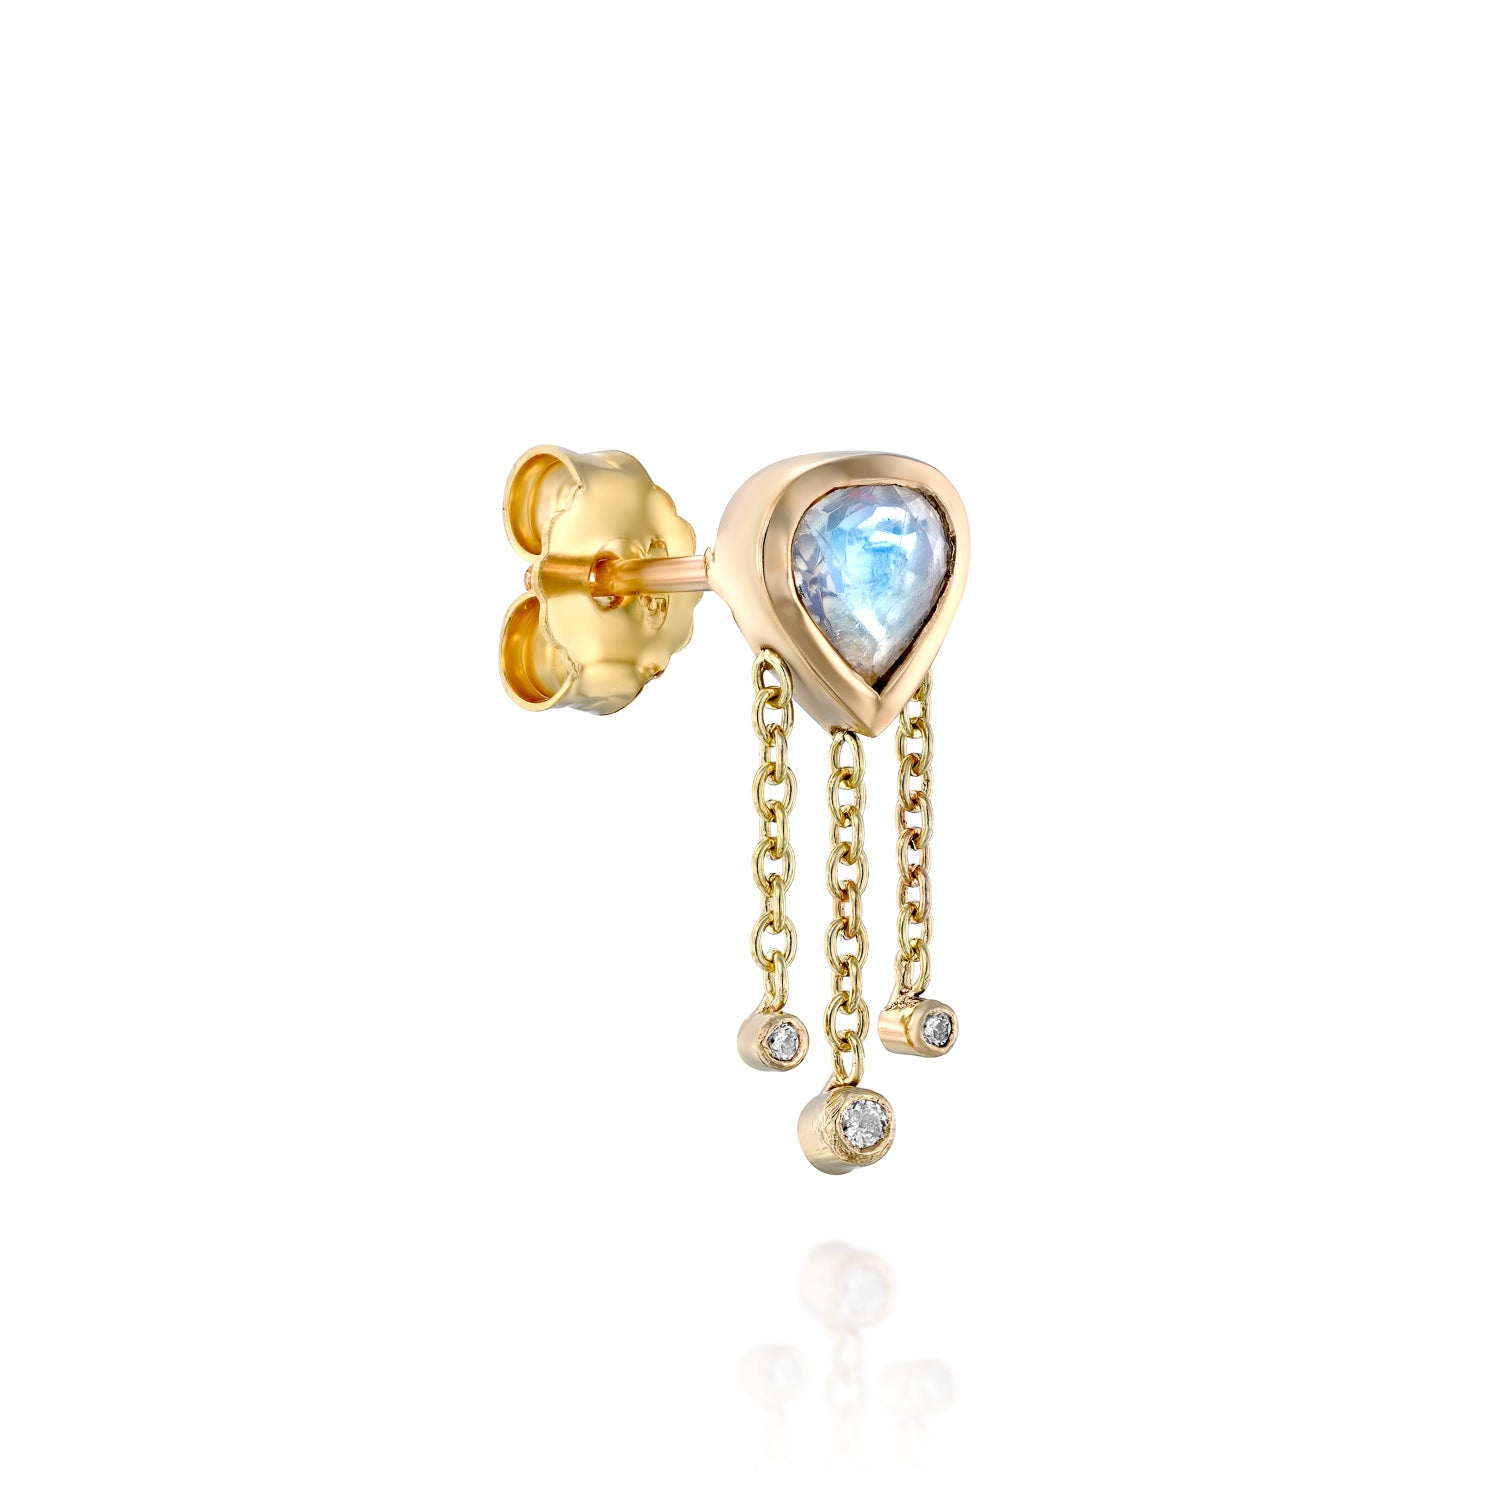 Bhagsu Earring &amp; Moonstone  - one of a kind - Danielle Gerber Freedom Jewelry